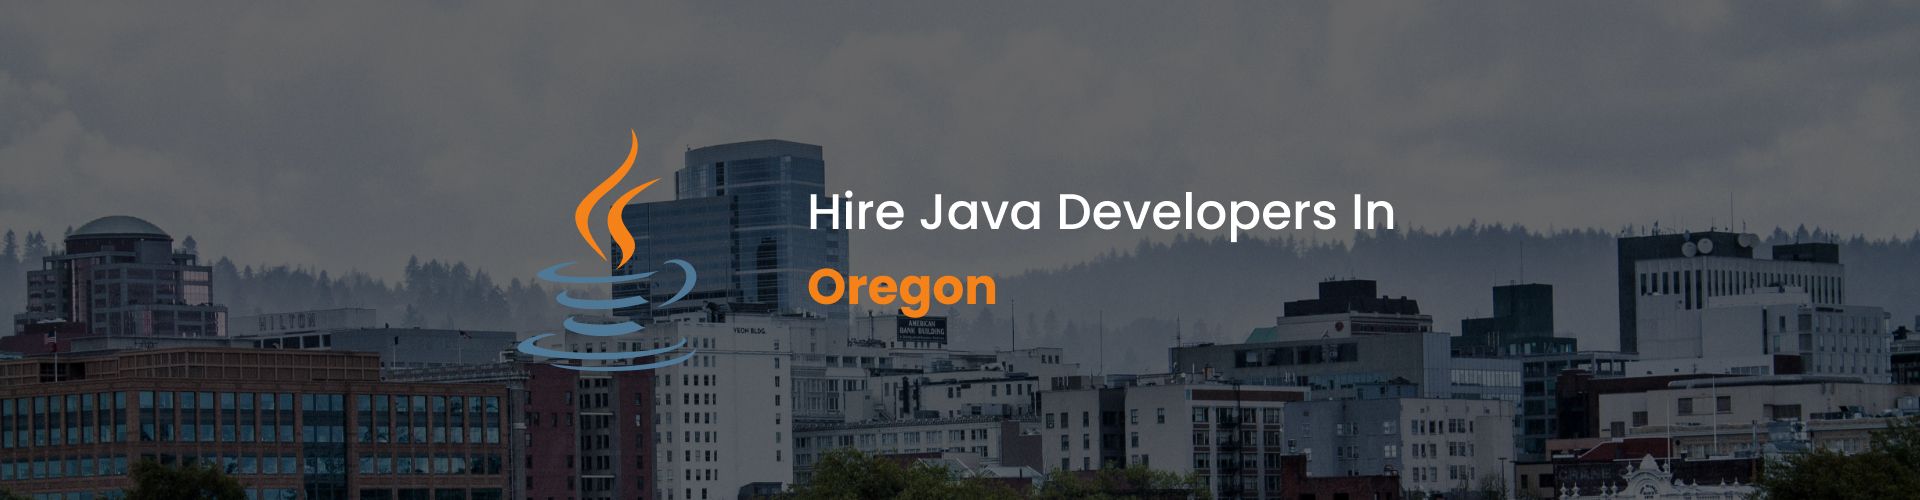 hire java developers in oregon